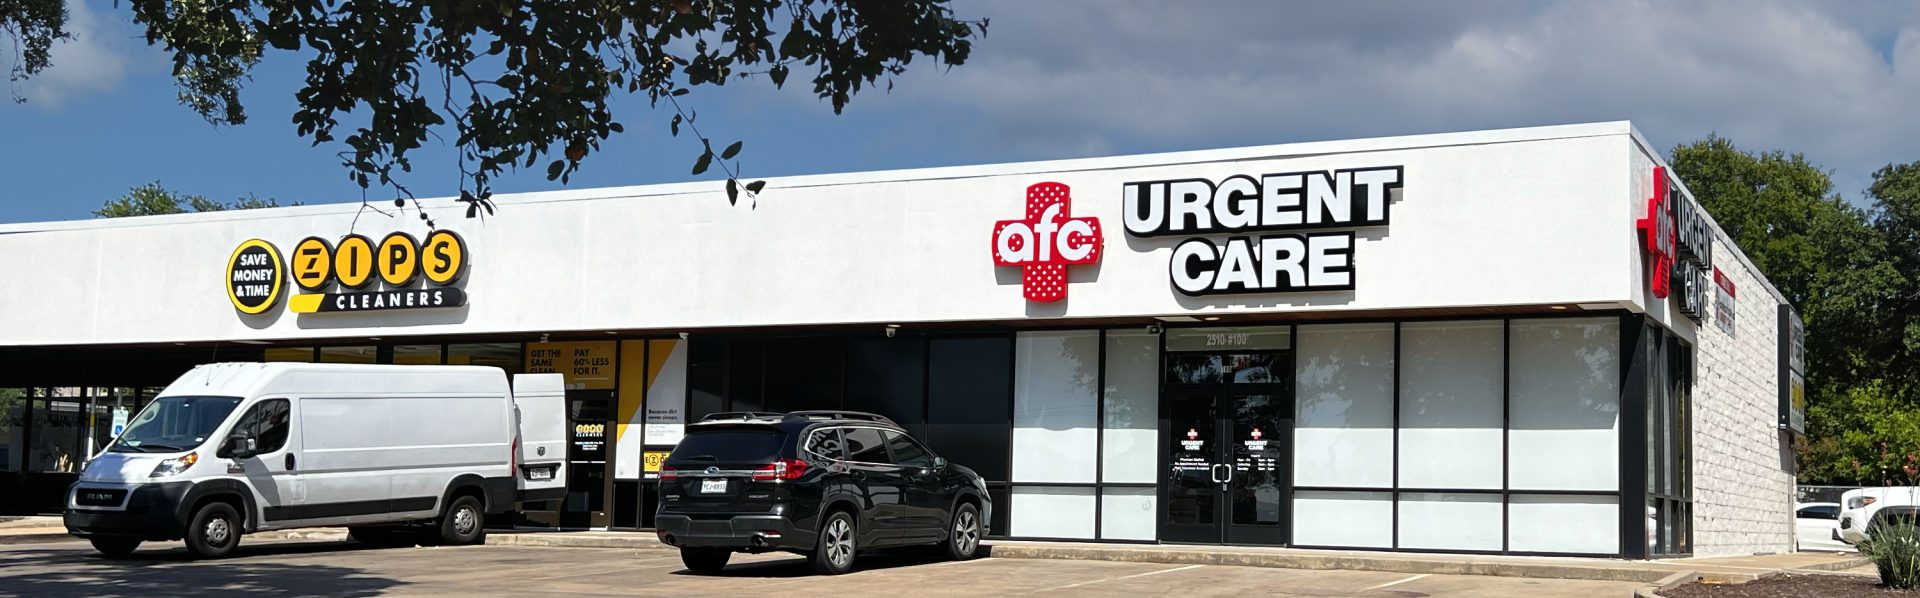 Visit our urgent care center in Austin, TX